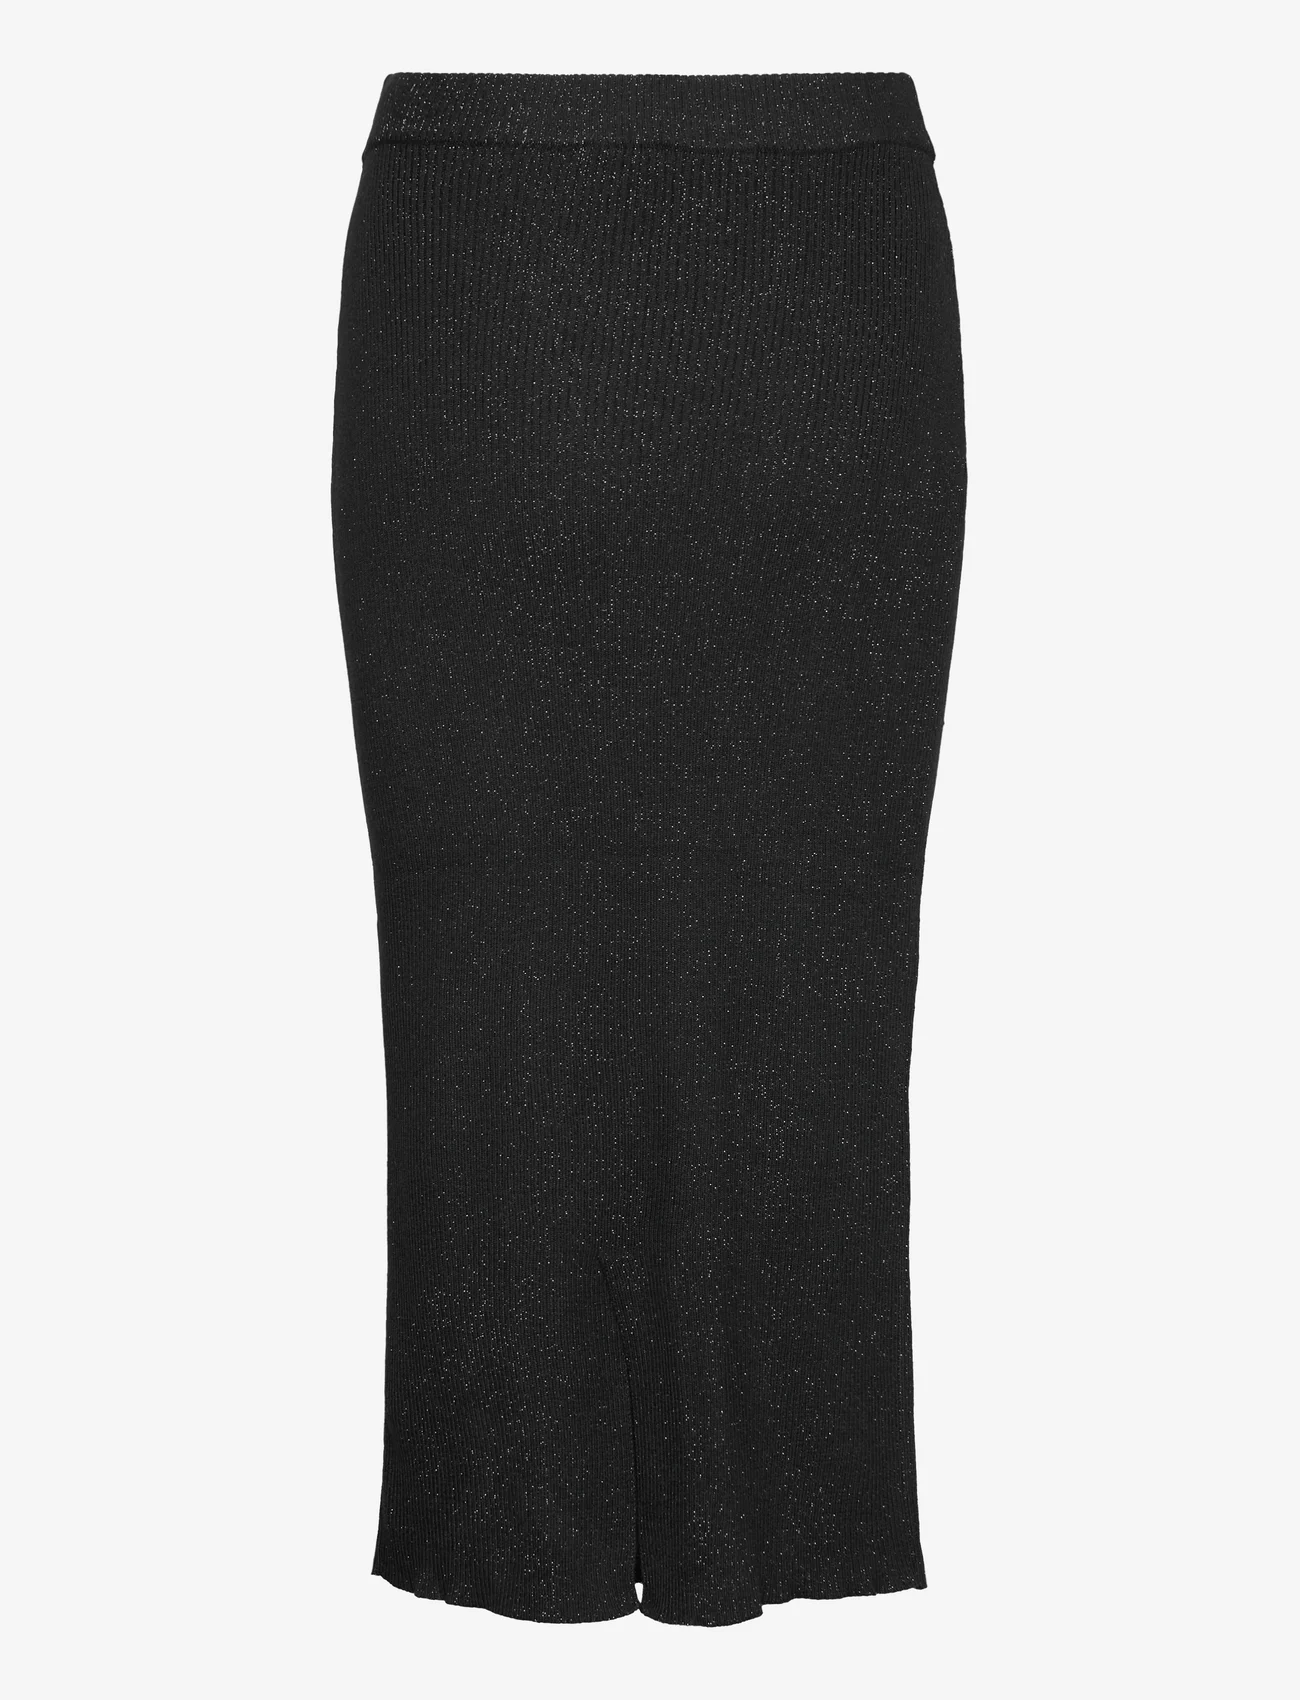 Esprit Casual - Sparkly midi skirt - black 3 - 1